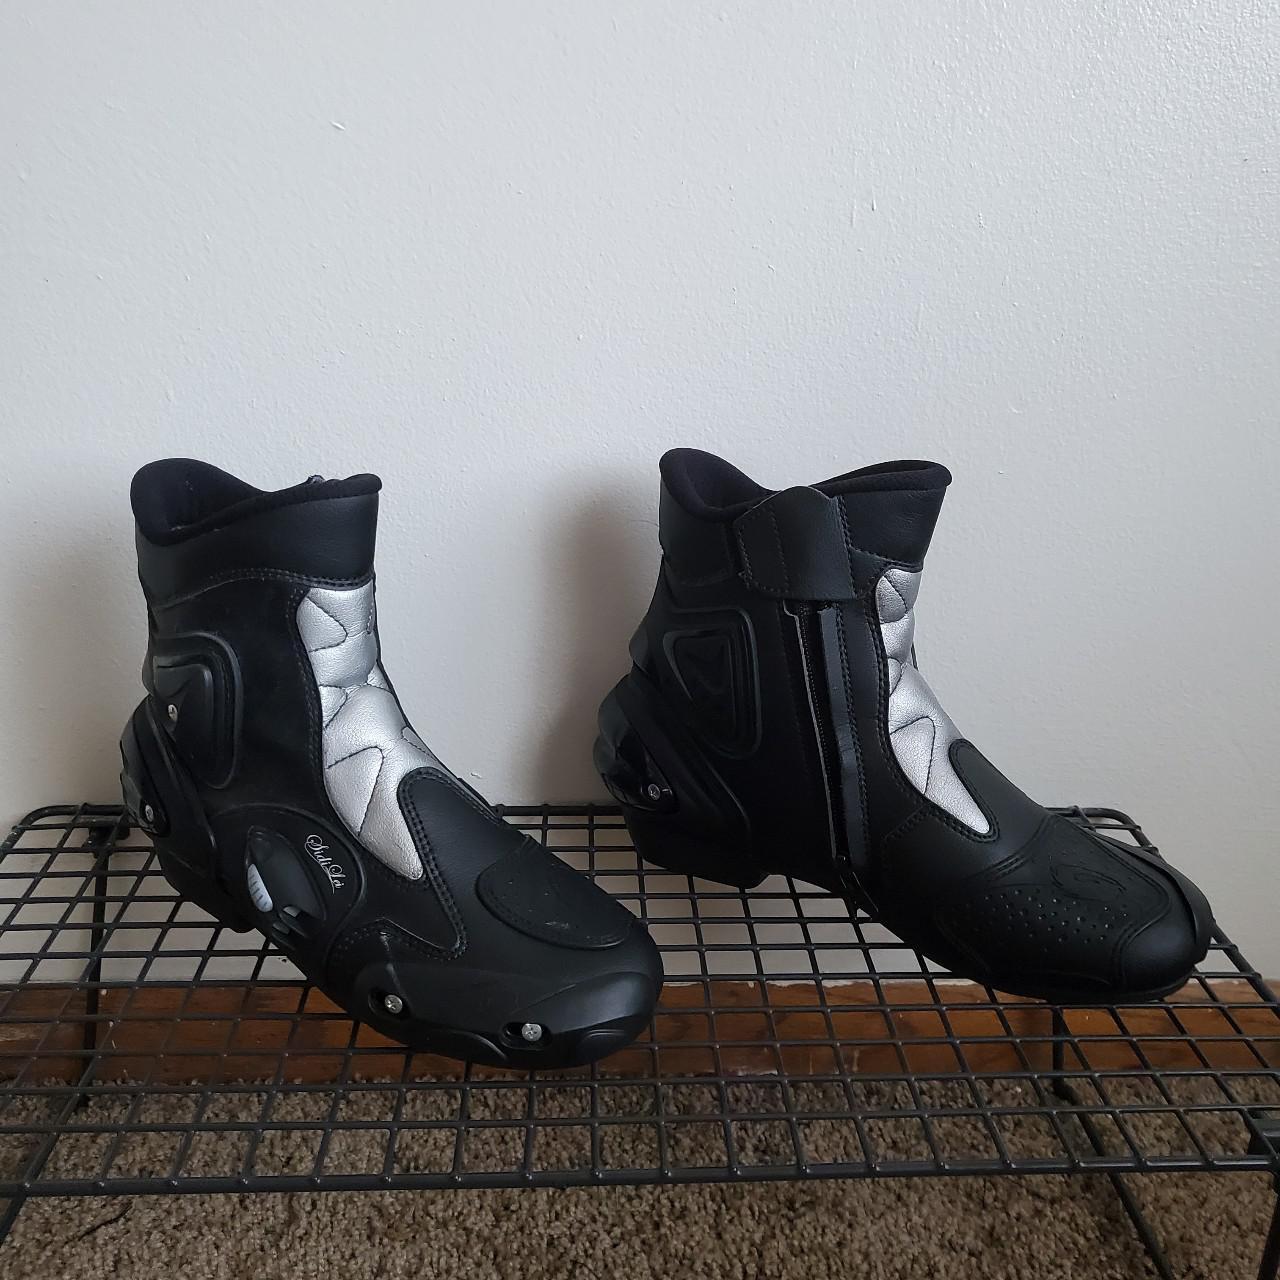 Product Image 1 - Sidi motocross boots light wear